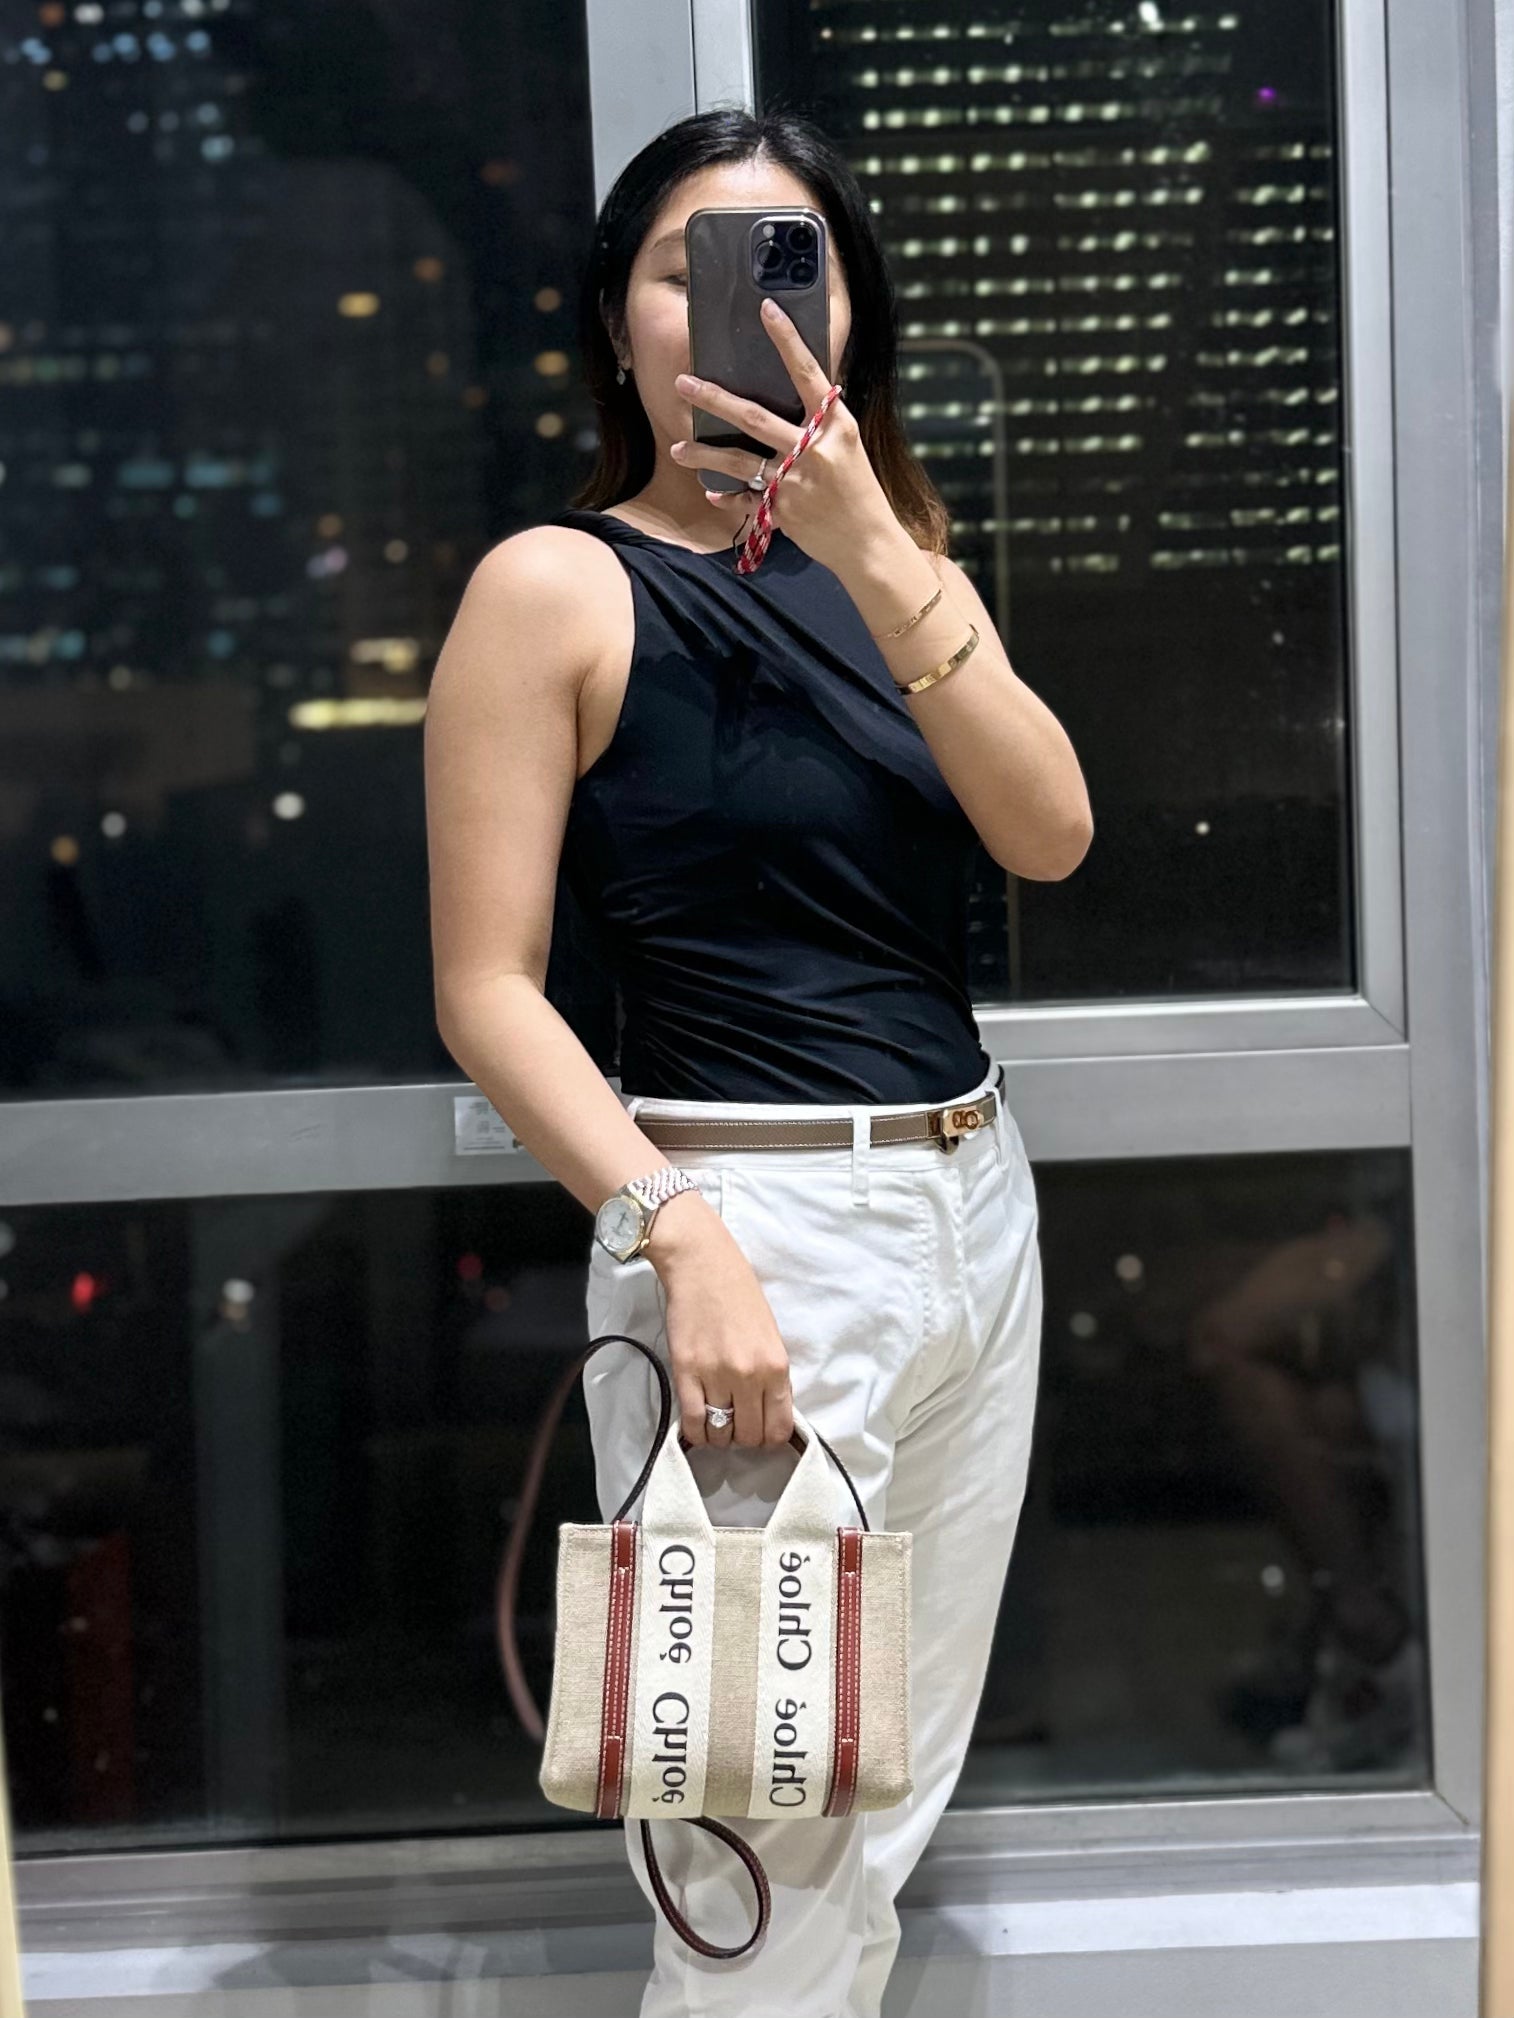 Chloe Mini Woody Canvas Tote Bag (White/Brown) | Purse Maison Luxury Bags Shop